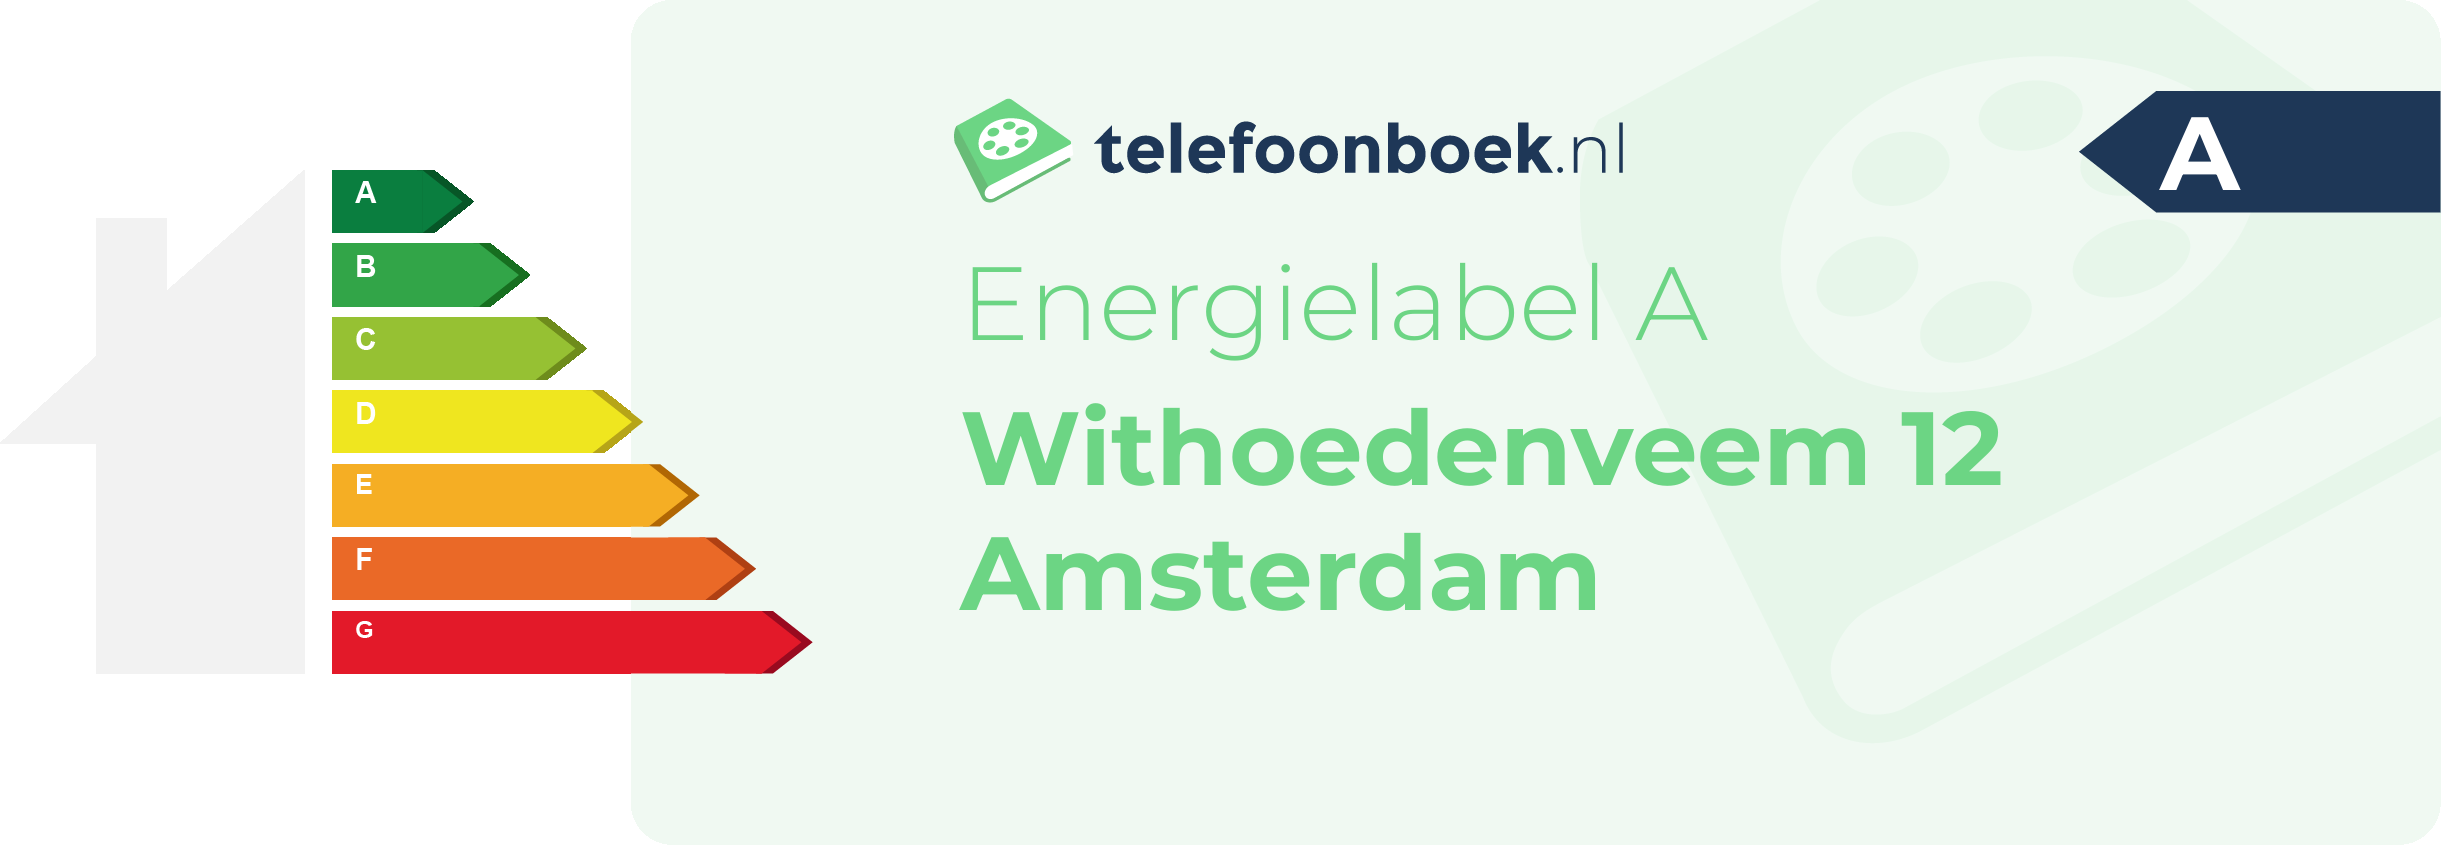 Energielabel Withoedenveem 12 Amsterdam